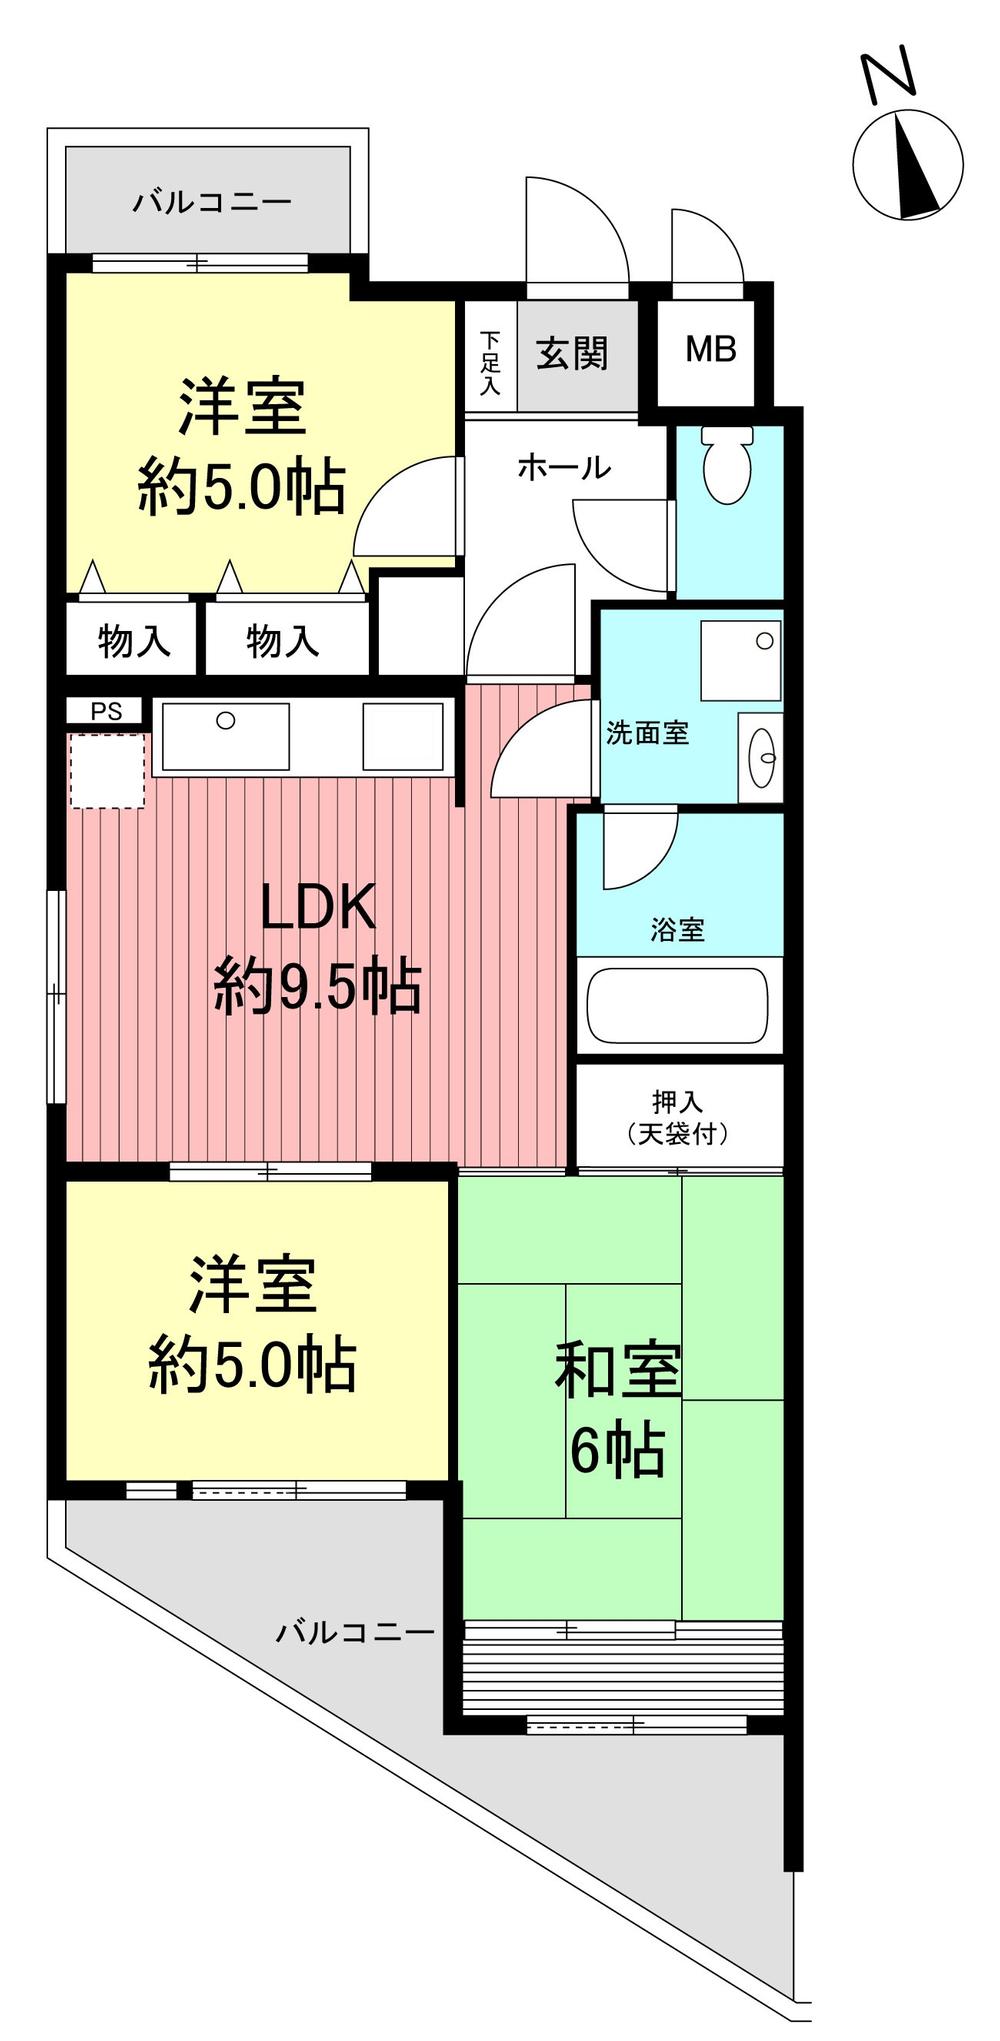 Floor plan. 3LDK, Price 10.8 million yen, Occupied area 60.76 sq m , Balcony area 11.37 sq m